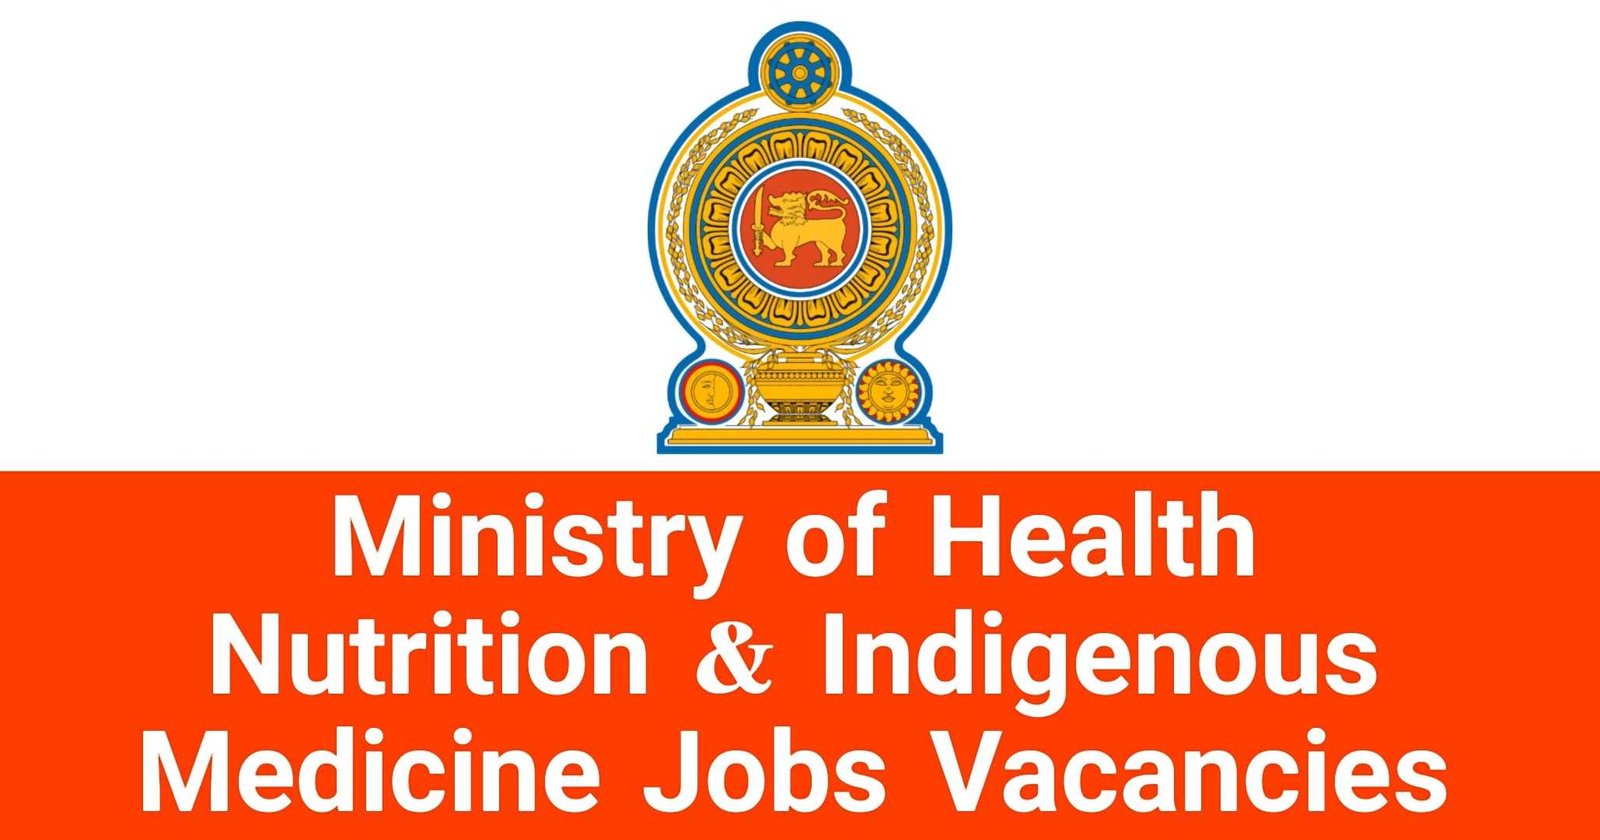 Ministry of Health Nutrition & Indigenous Medicine Jobs Vacancies Careers